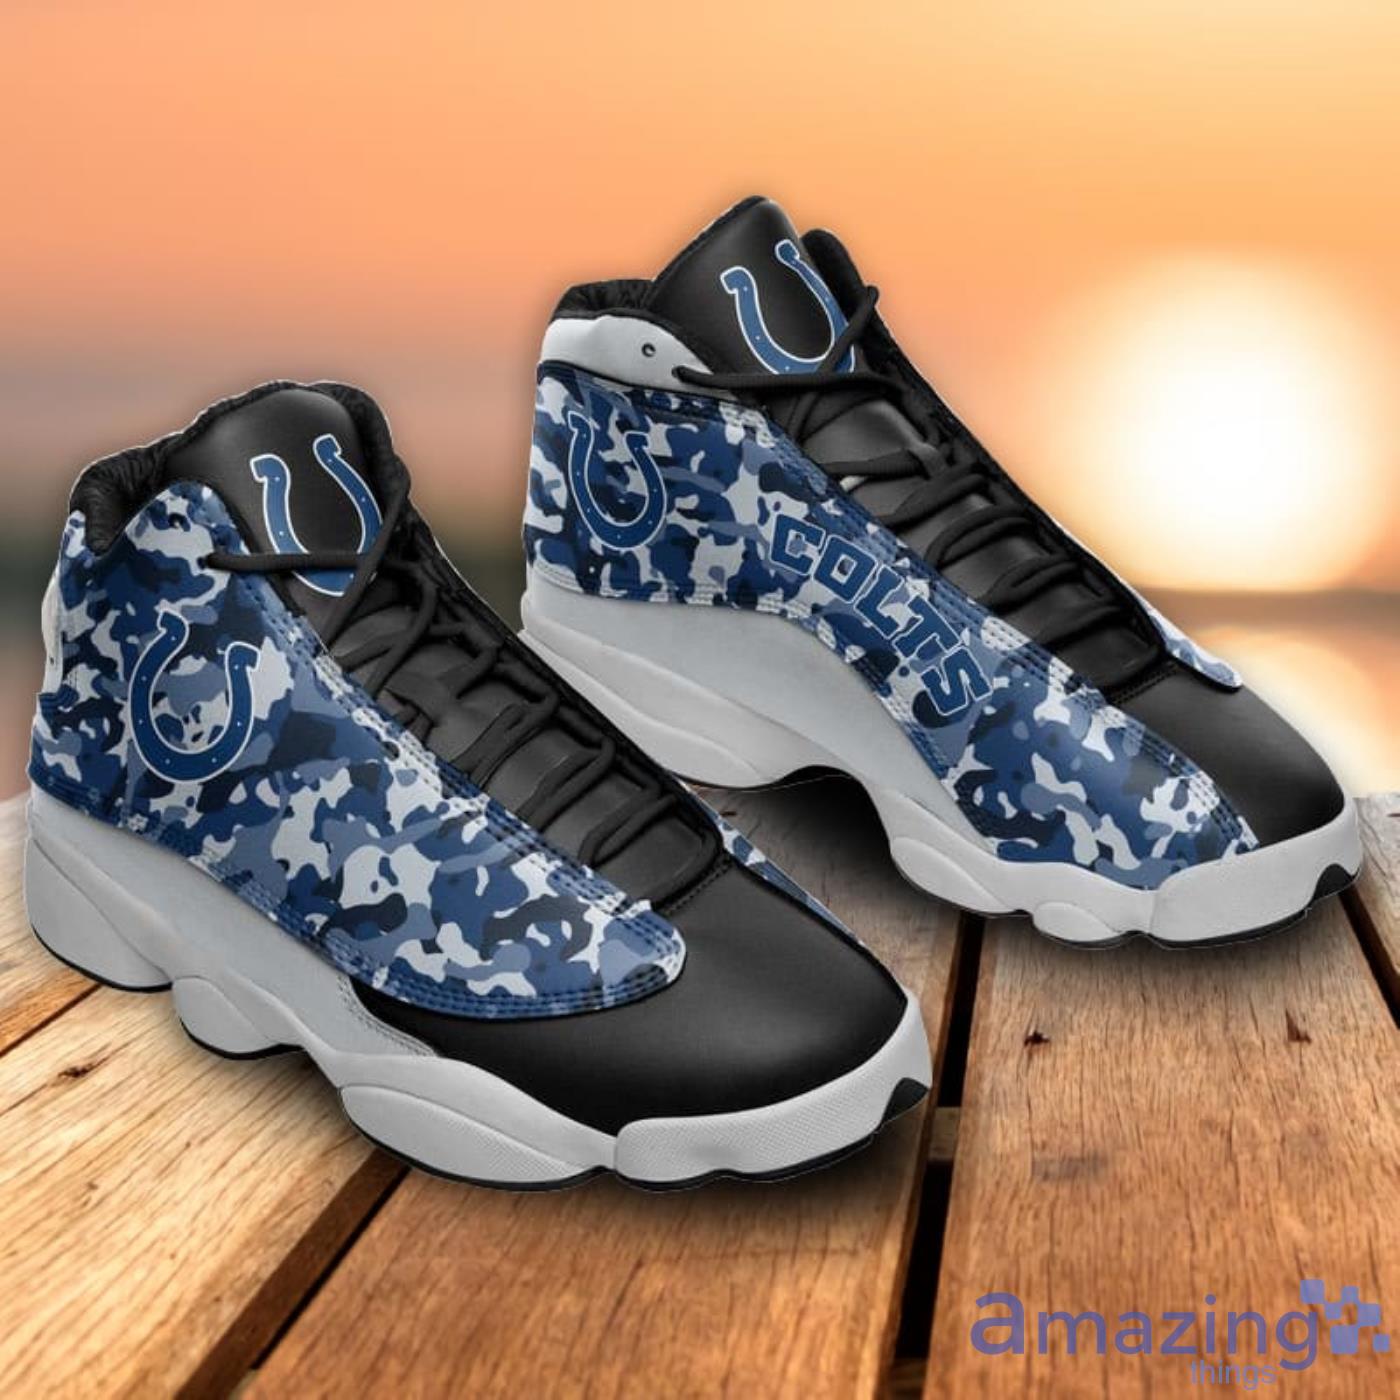 Indianapolis Colts Camo Pattern Air Jordan 13 Shoes For Fans